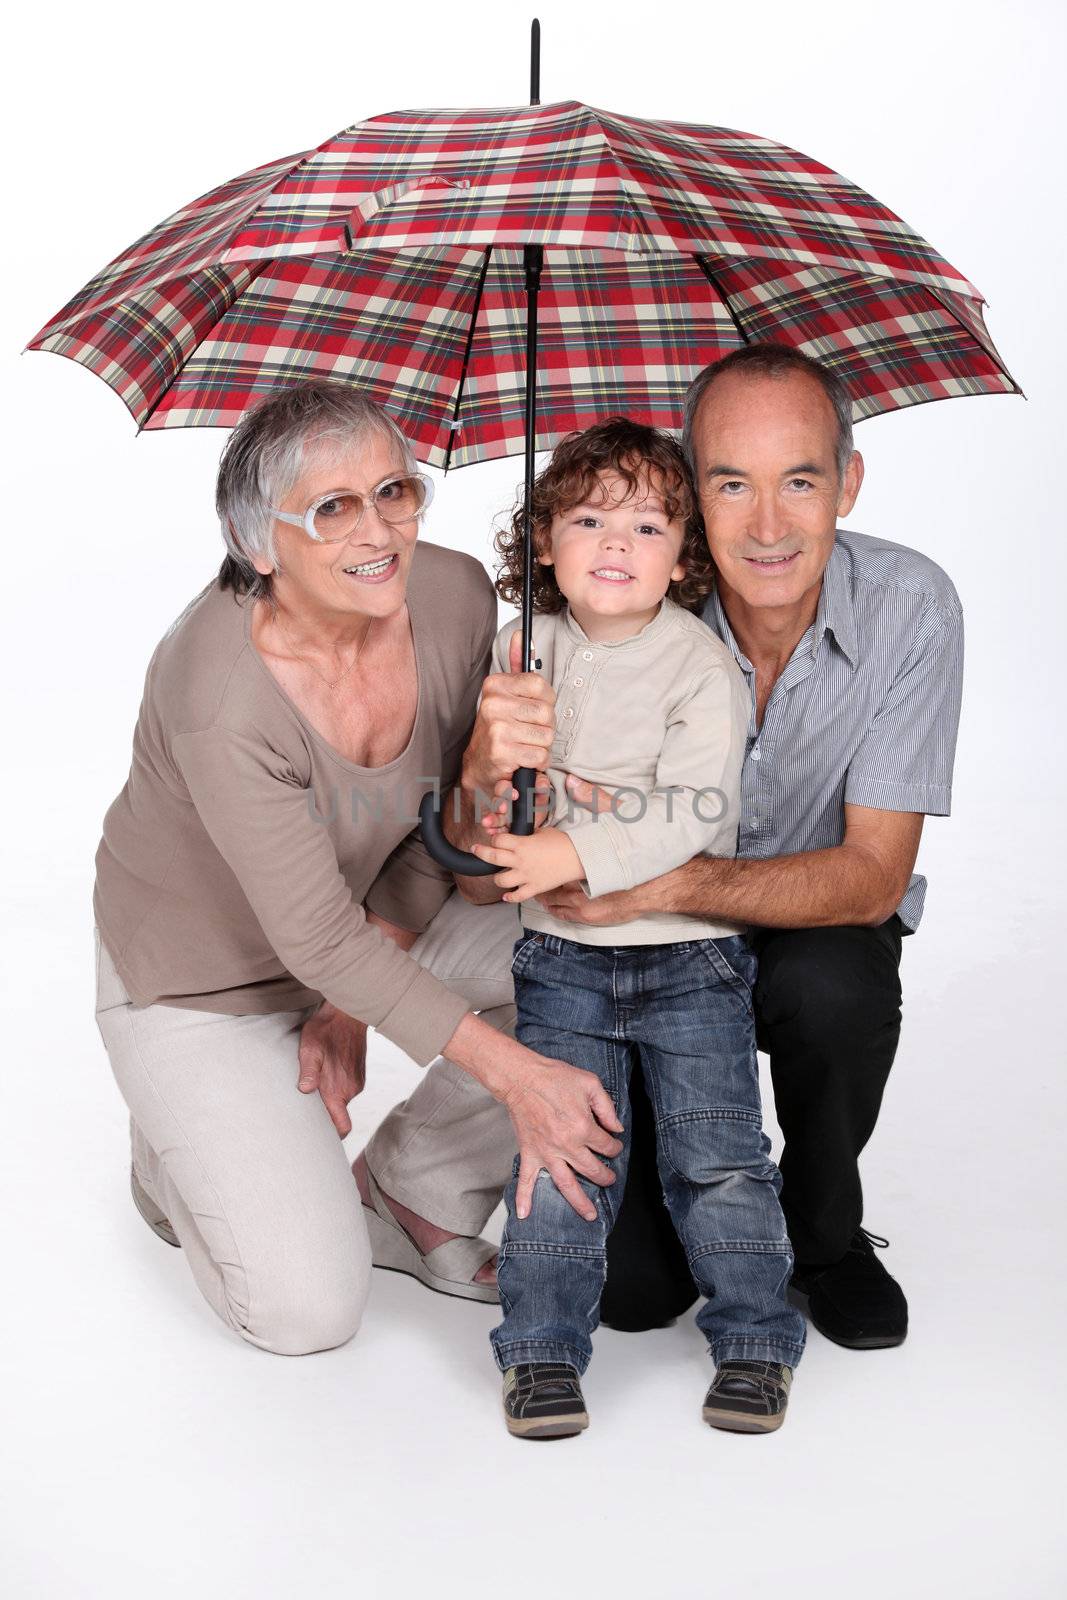 Stay under the umbrella honey